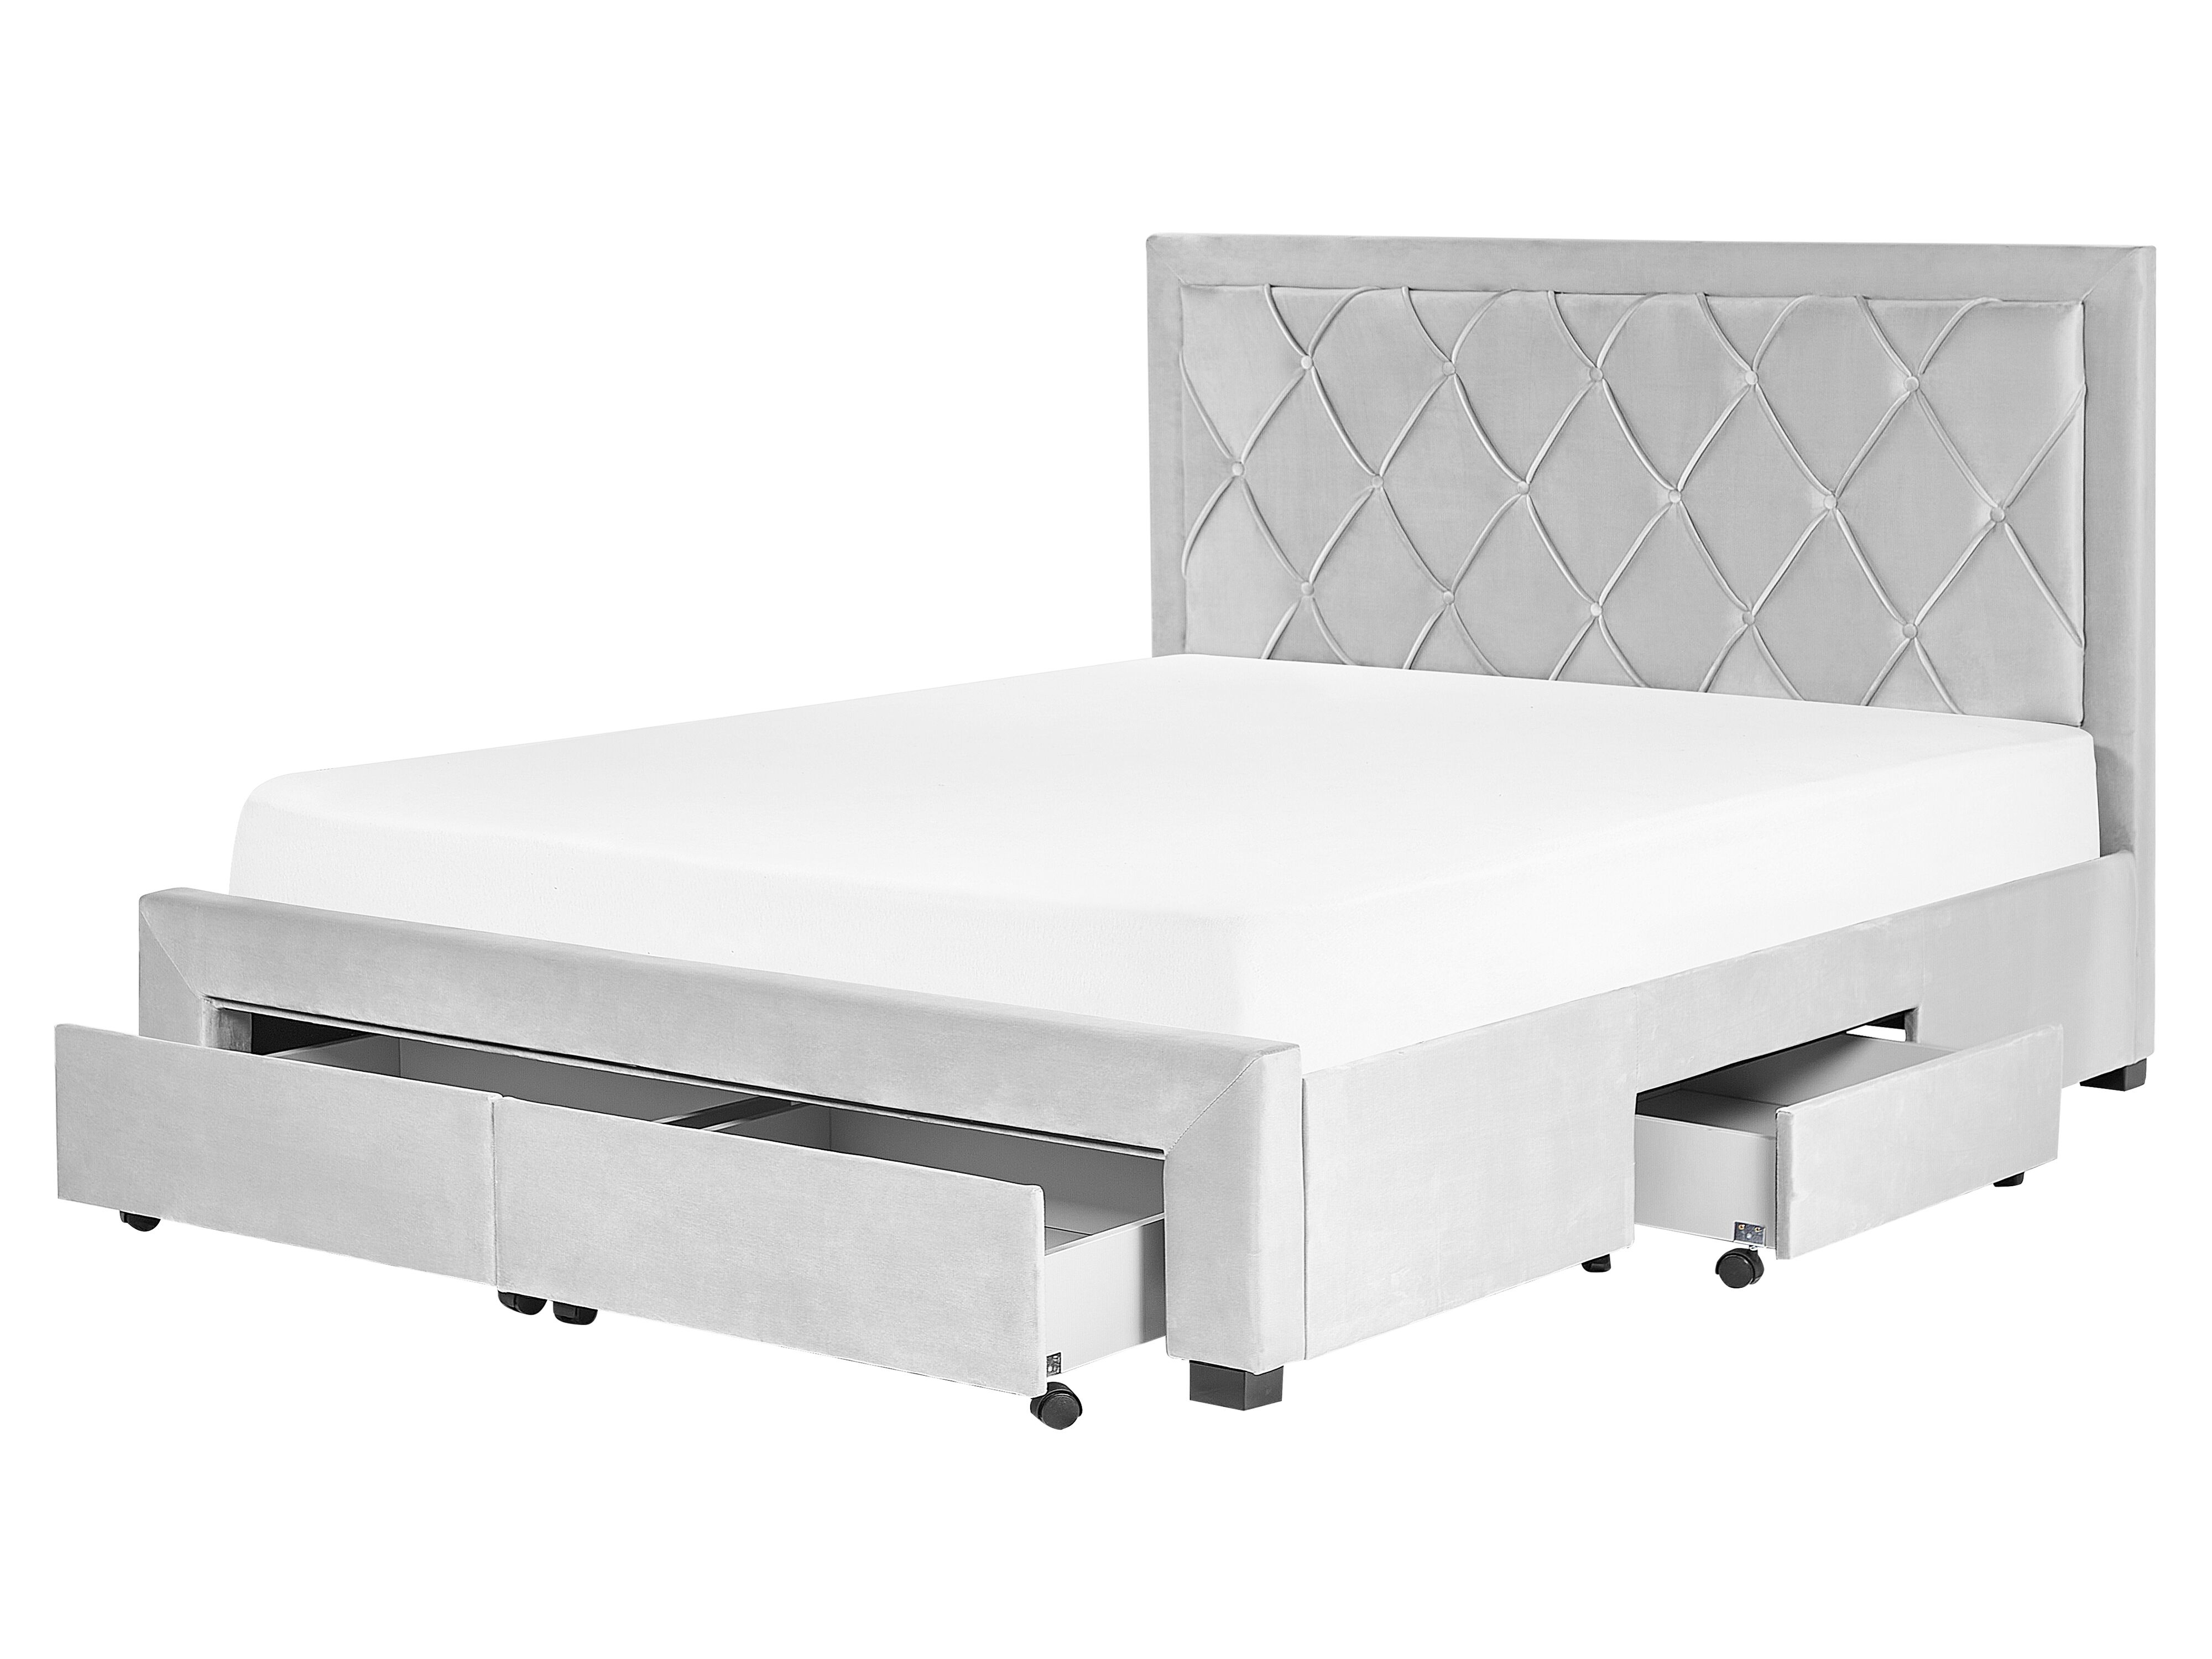 Bed, LIEVIN, light grey, 160x200cm